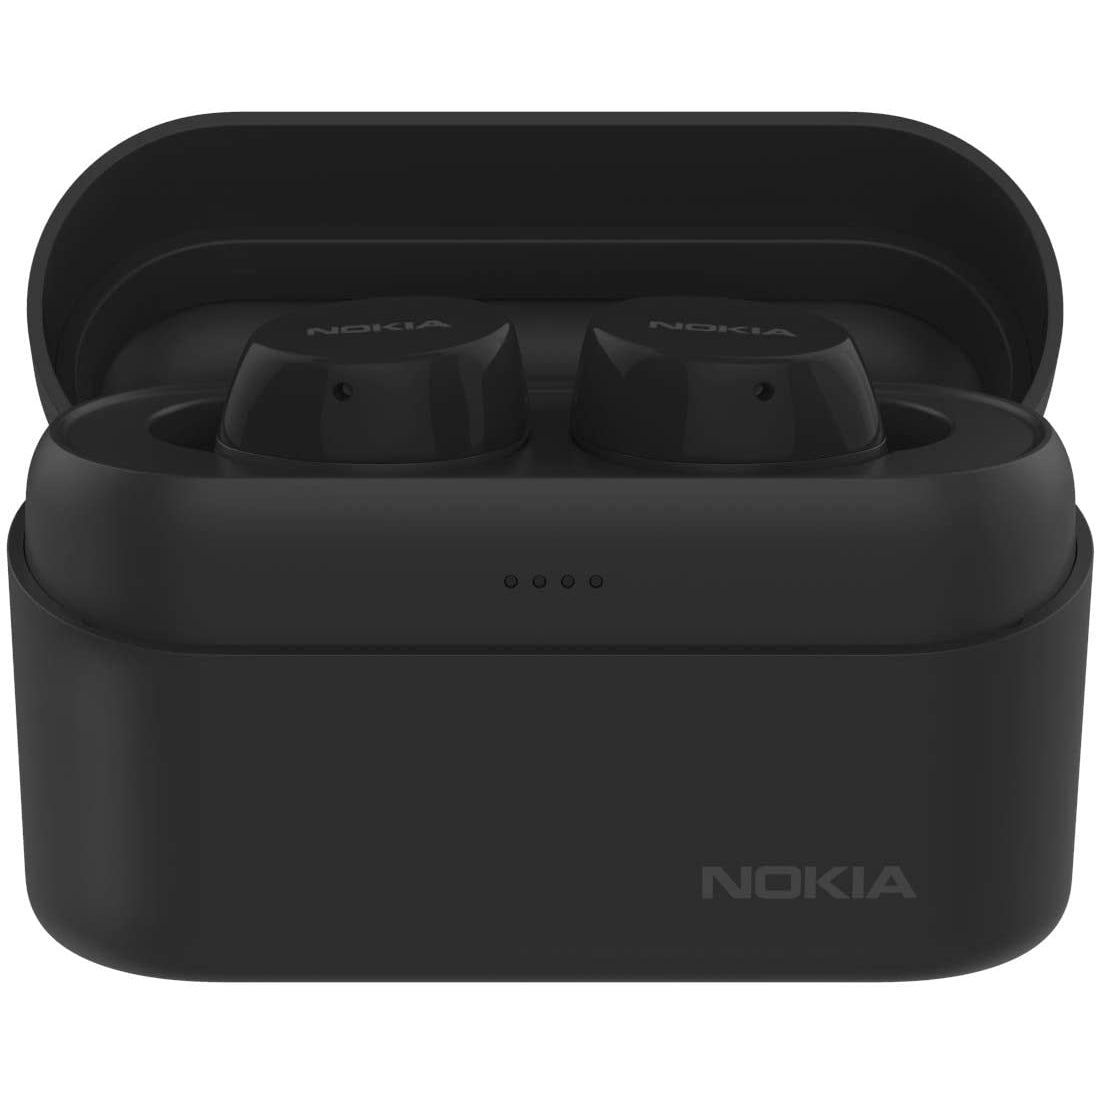 Nokia Power BH-605 Wireless Earbuds with Bluetooth, Black - Refurbished Good